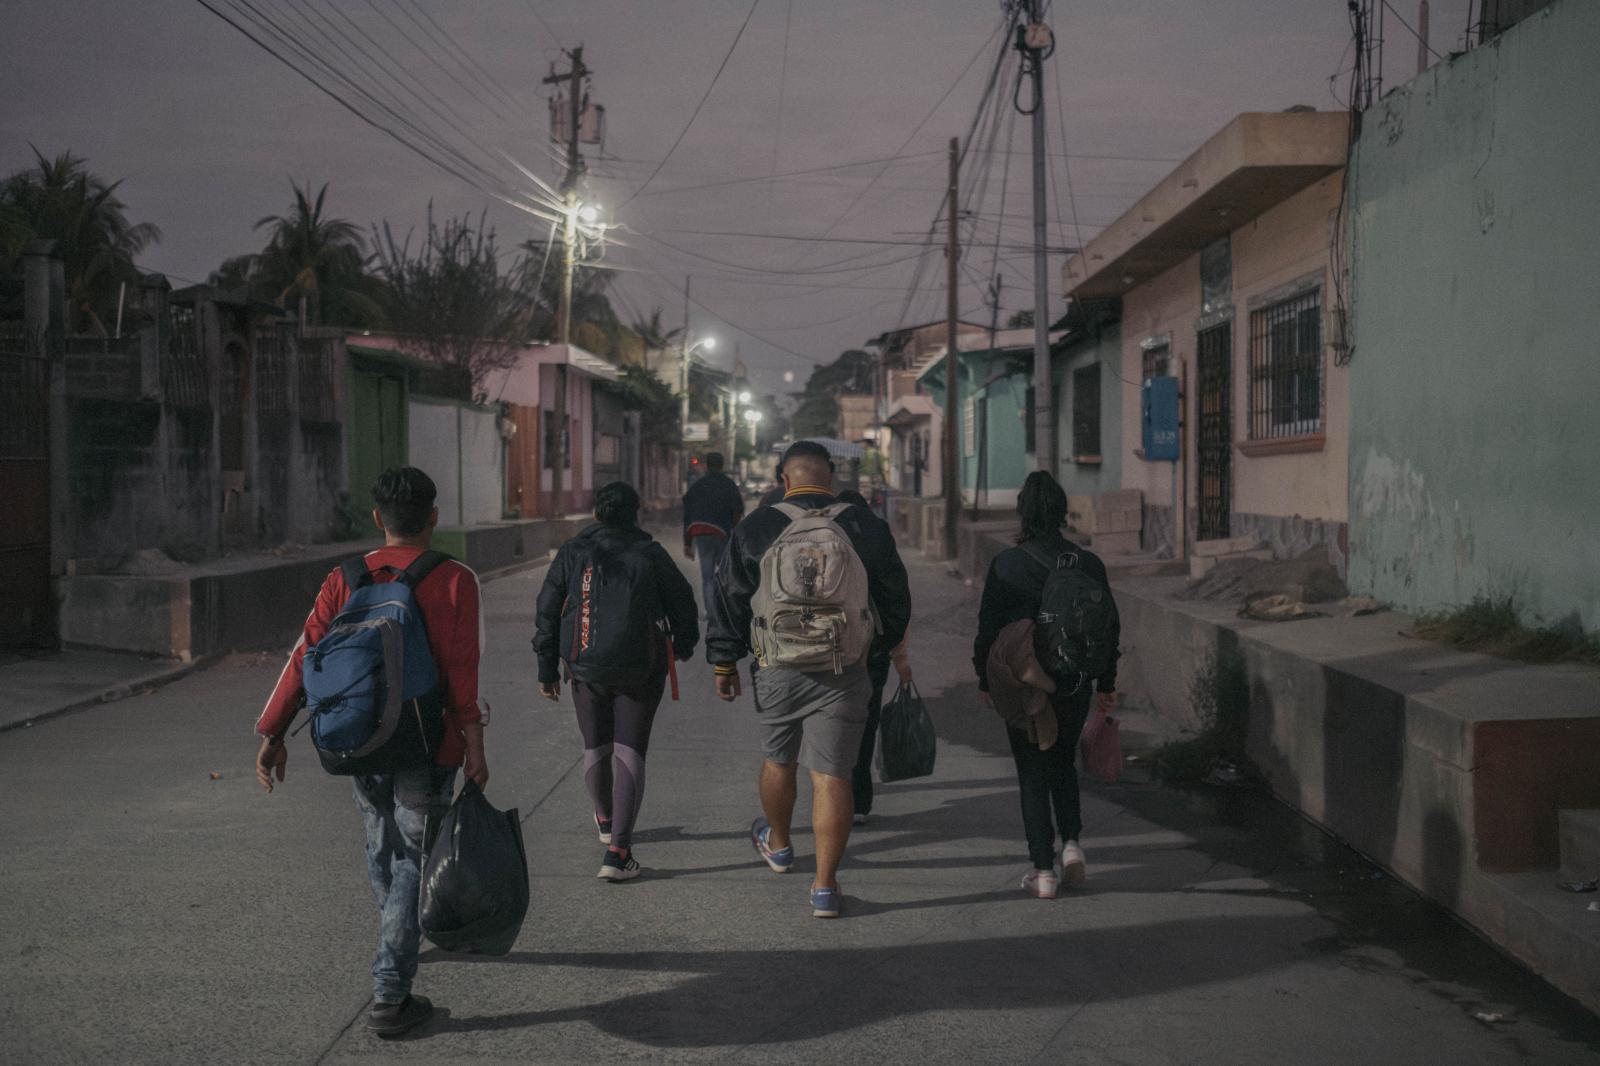 Le Monde - Ukrainian Refugees in Tijuana